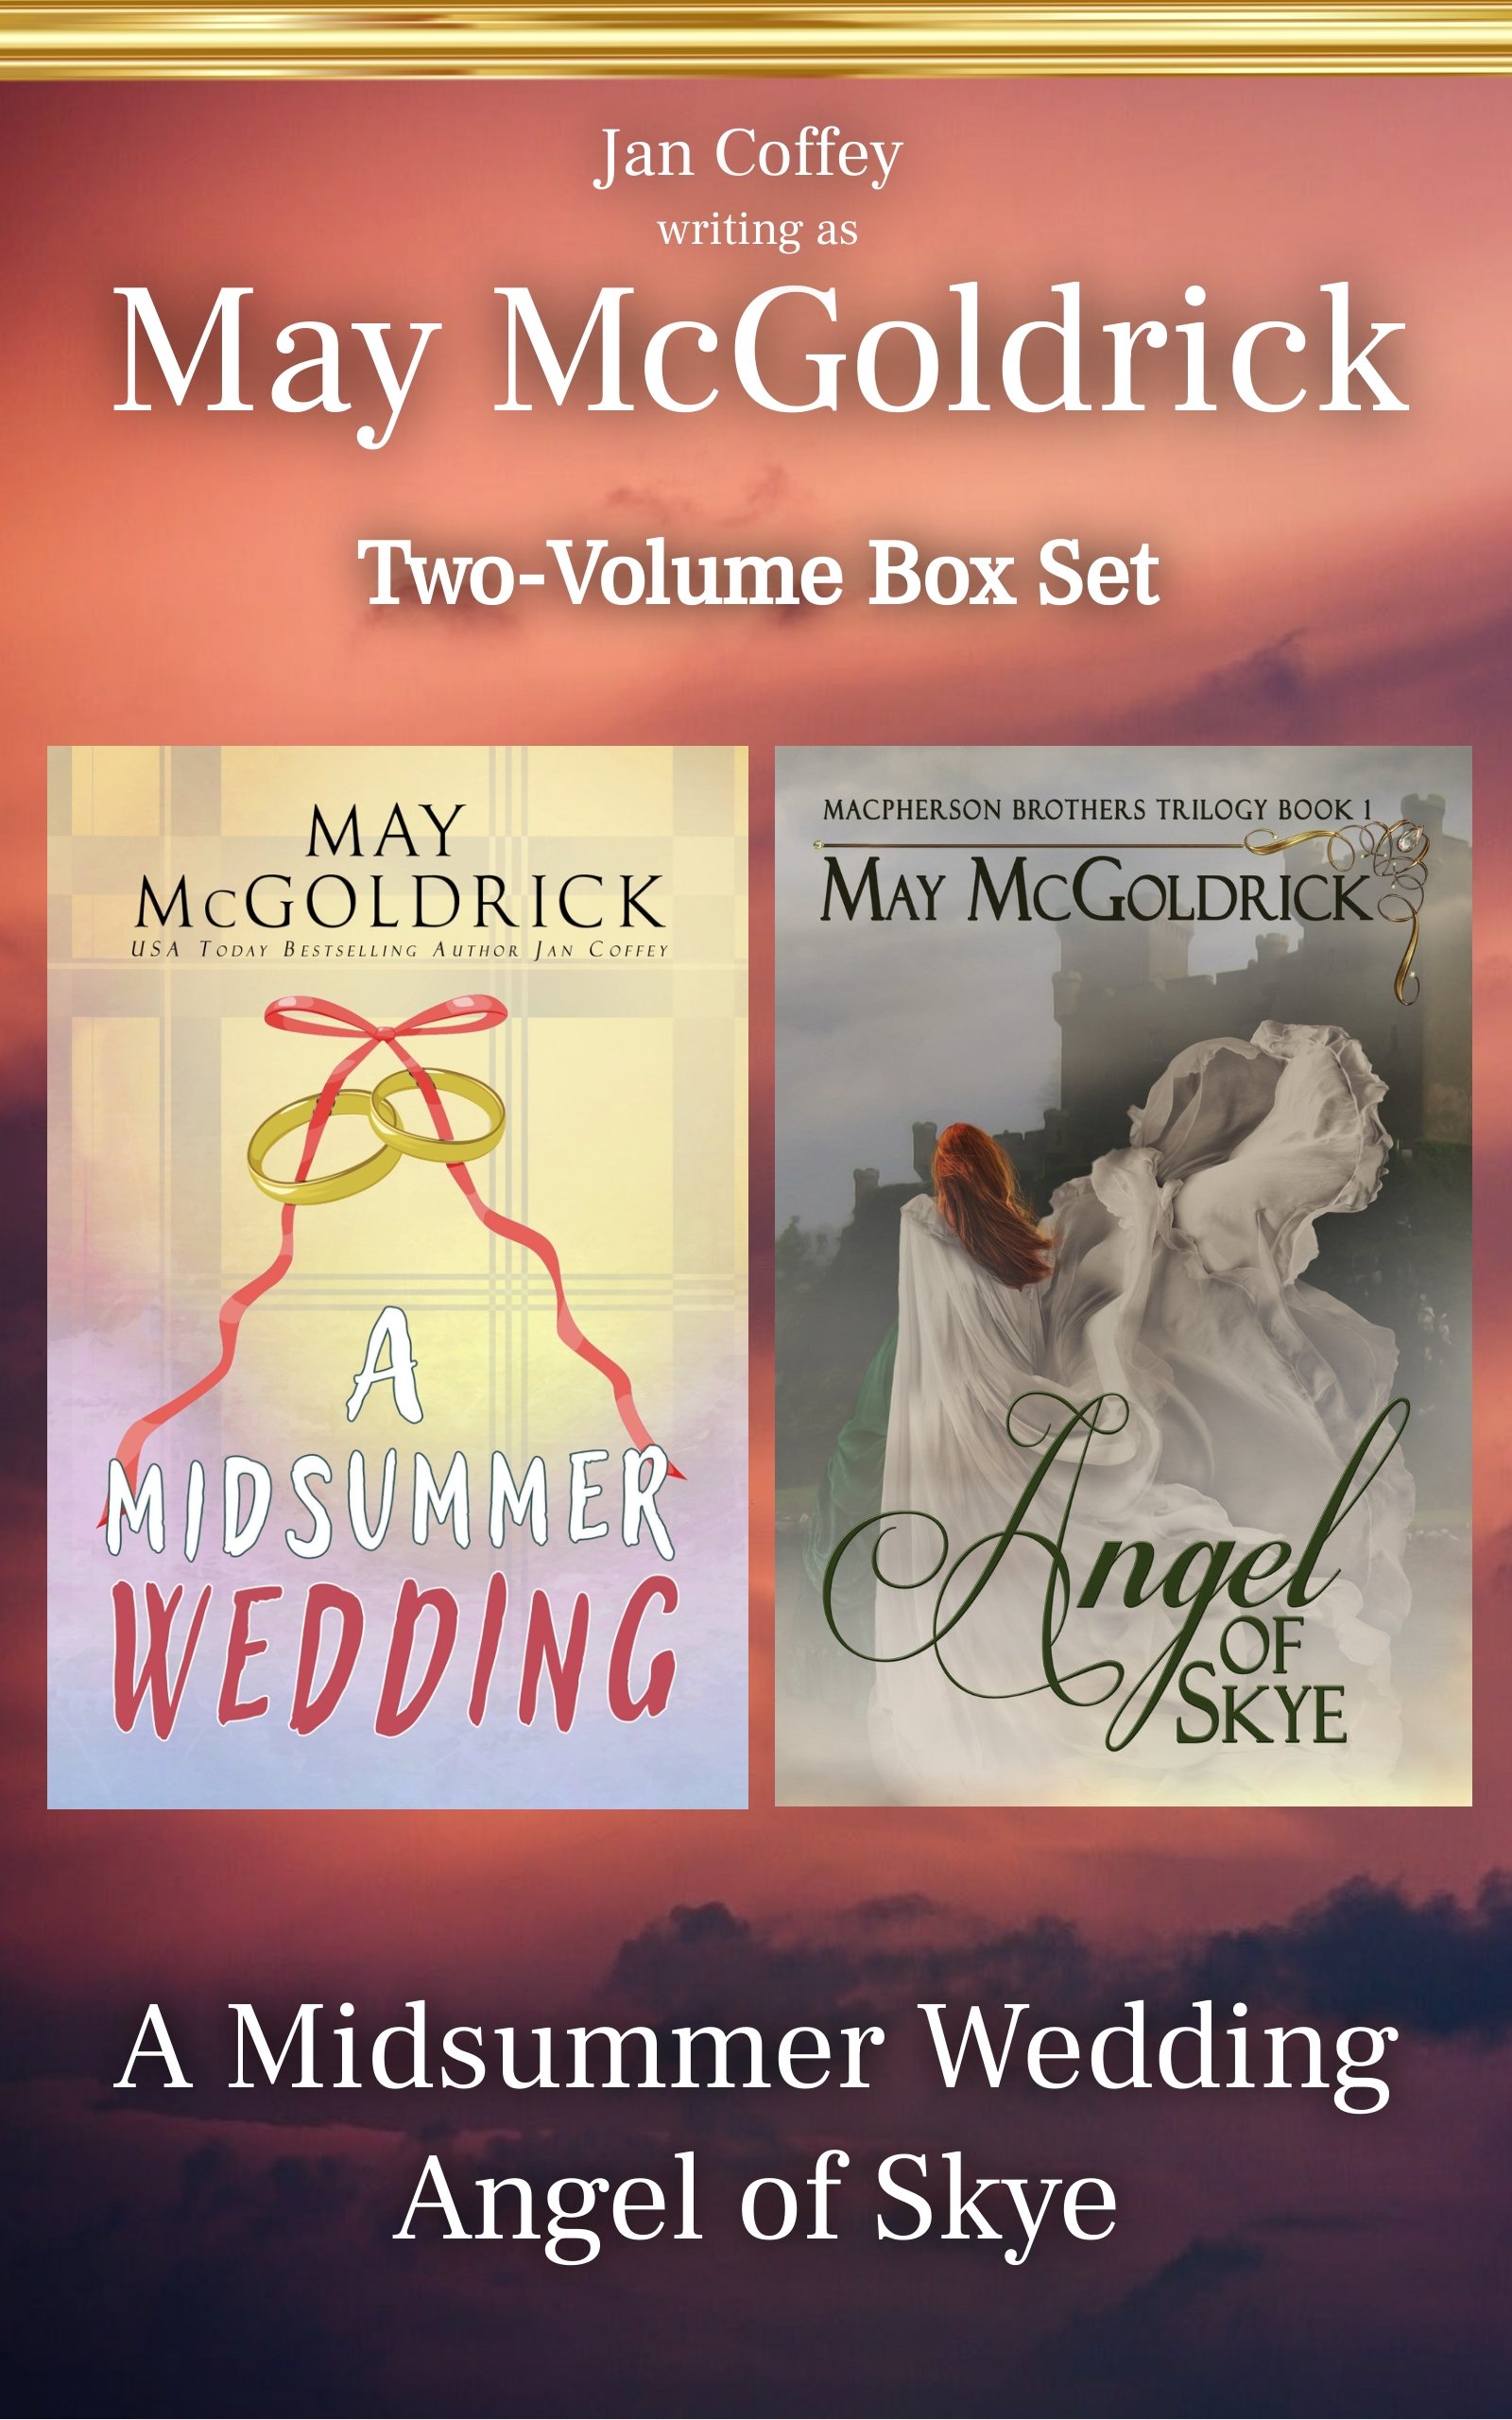 May McGoldrick Two-Volume Box Set cover copy.jpeg